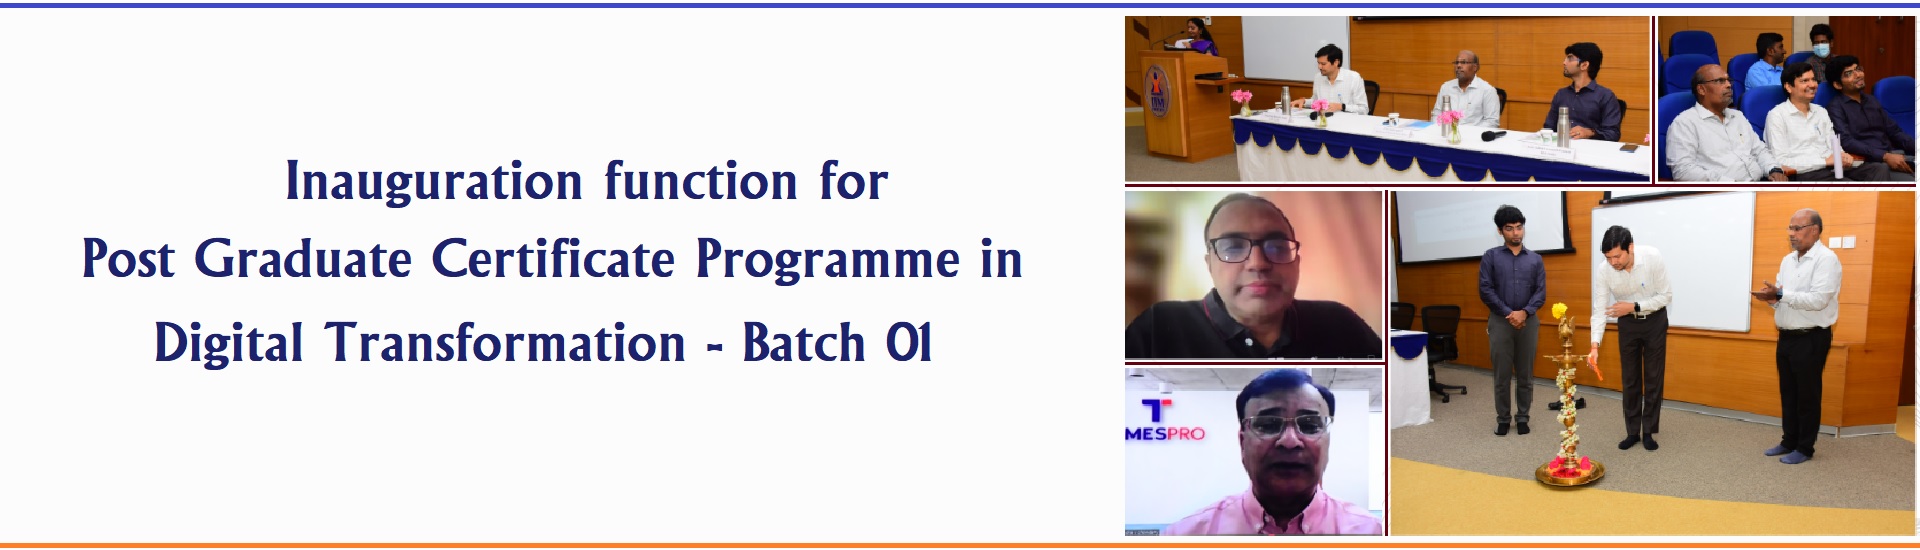 Inauguration of Post Graduate Certificate Programme in Digital Transformation Batch -01